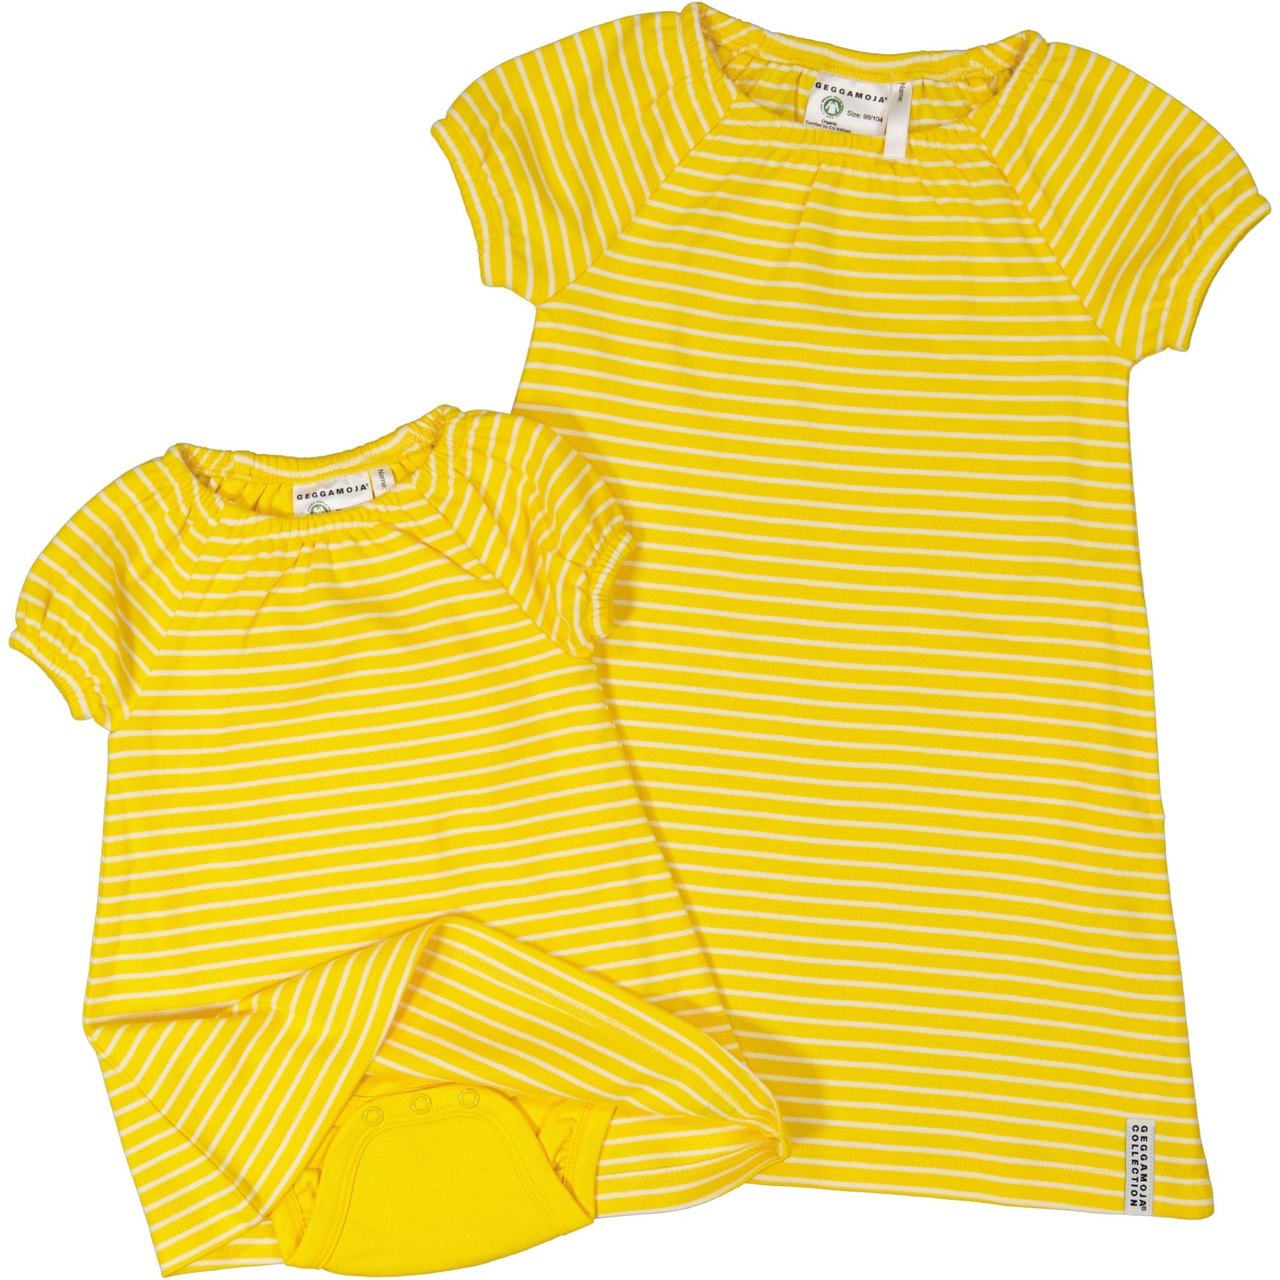 Singoalla dress Yellow/white  110/116